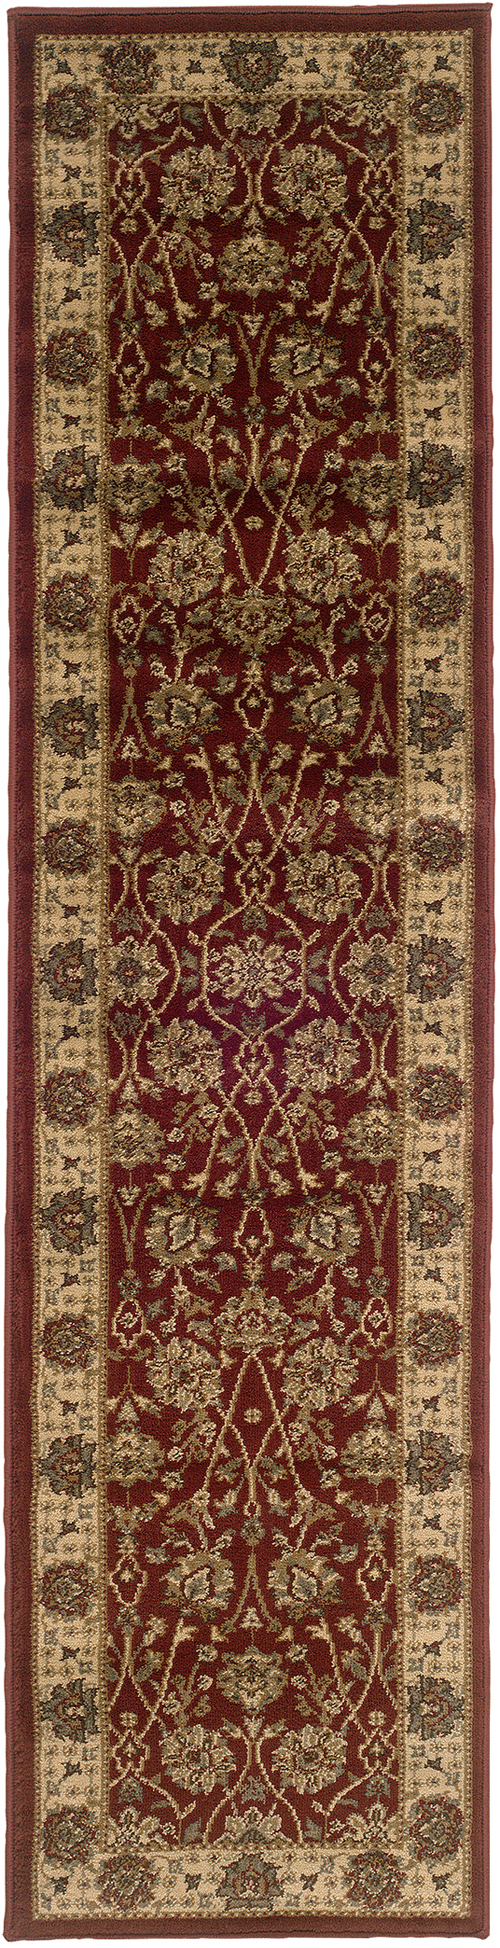 oriental weavers tybee 733r6 red